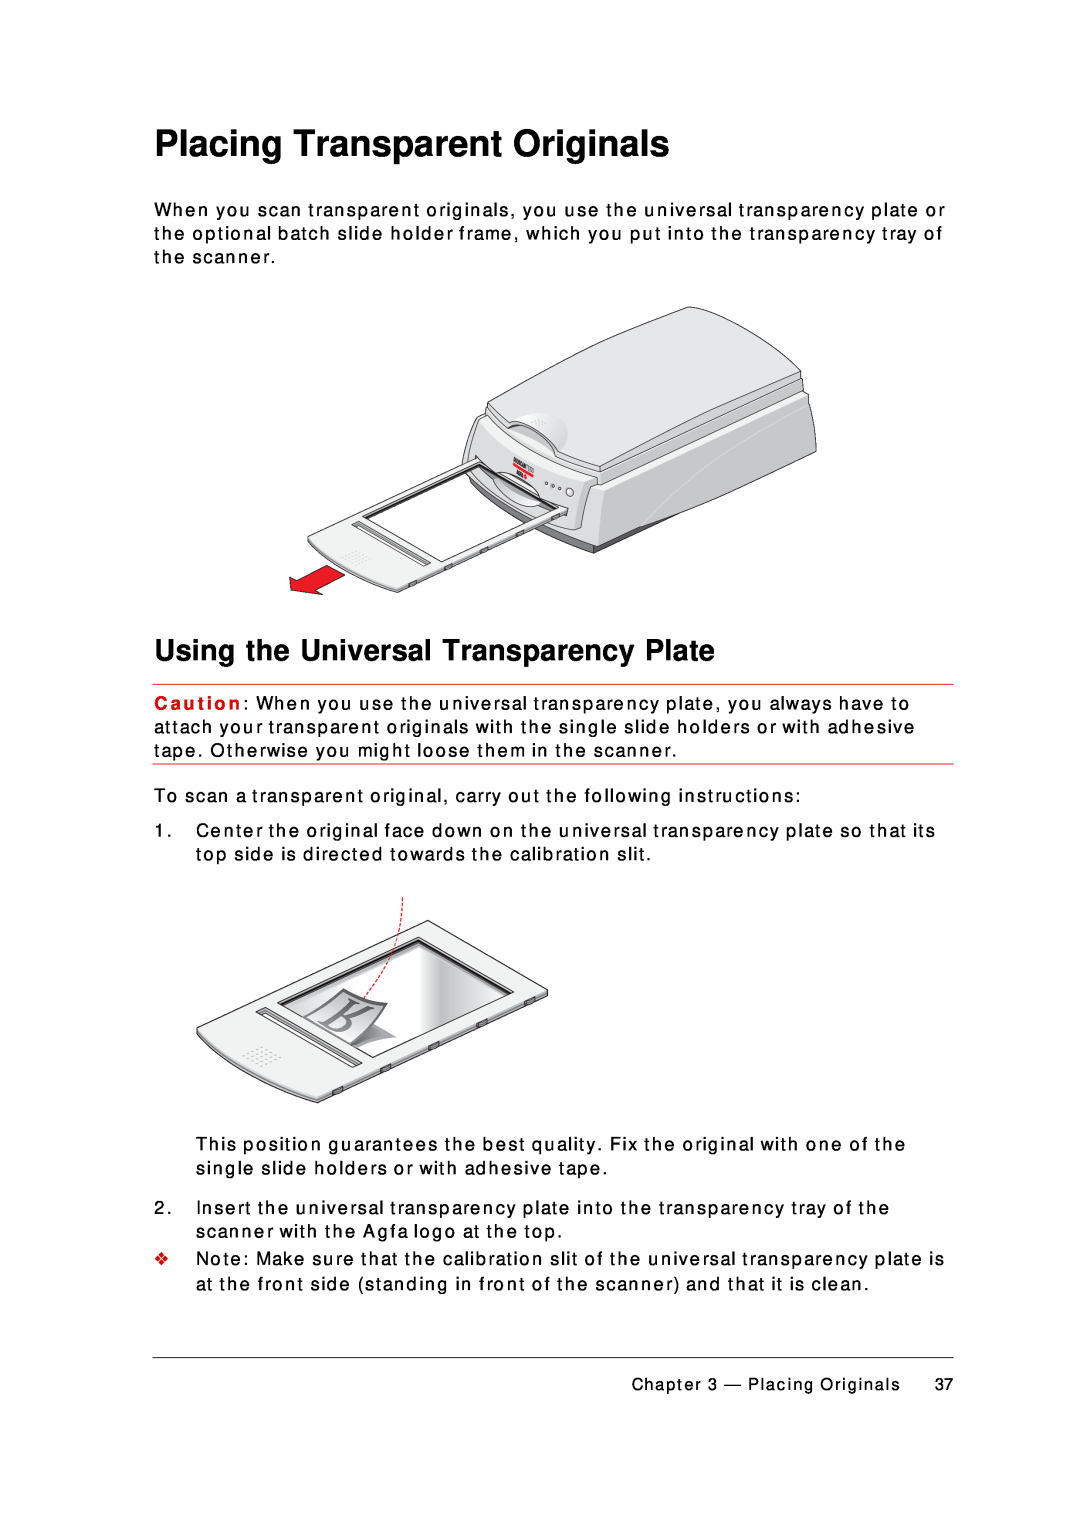 AGFA 1200 appendix Placing Transparent Originals, Using the Universal Transparency Plate 